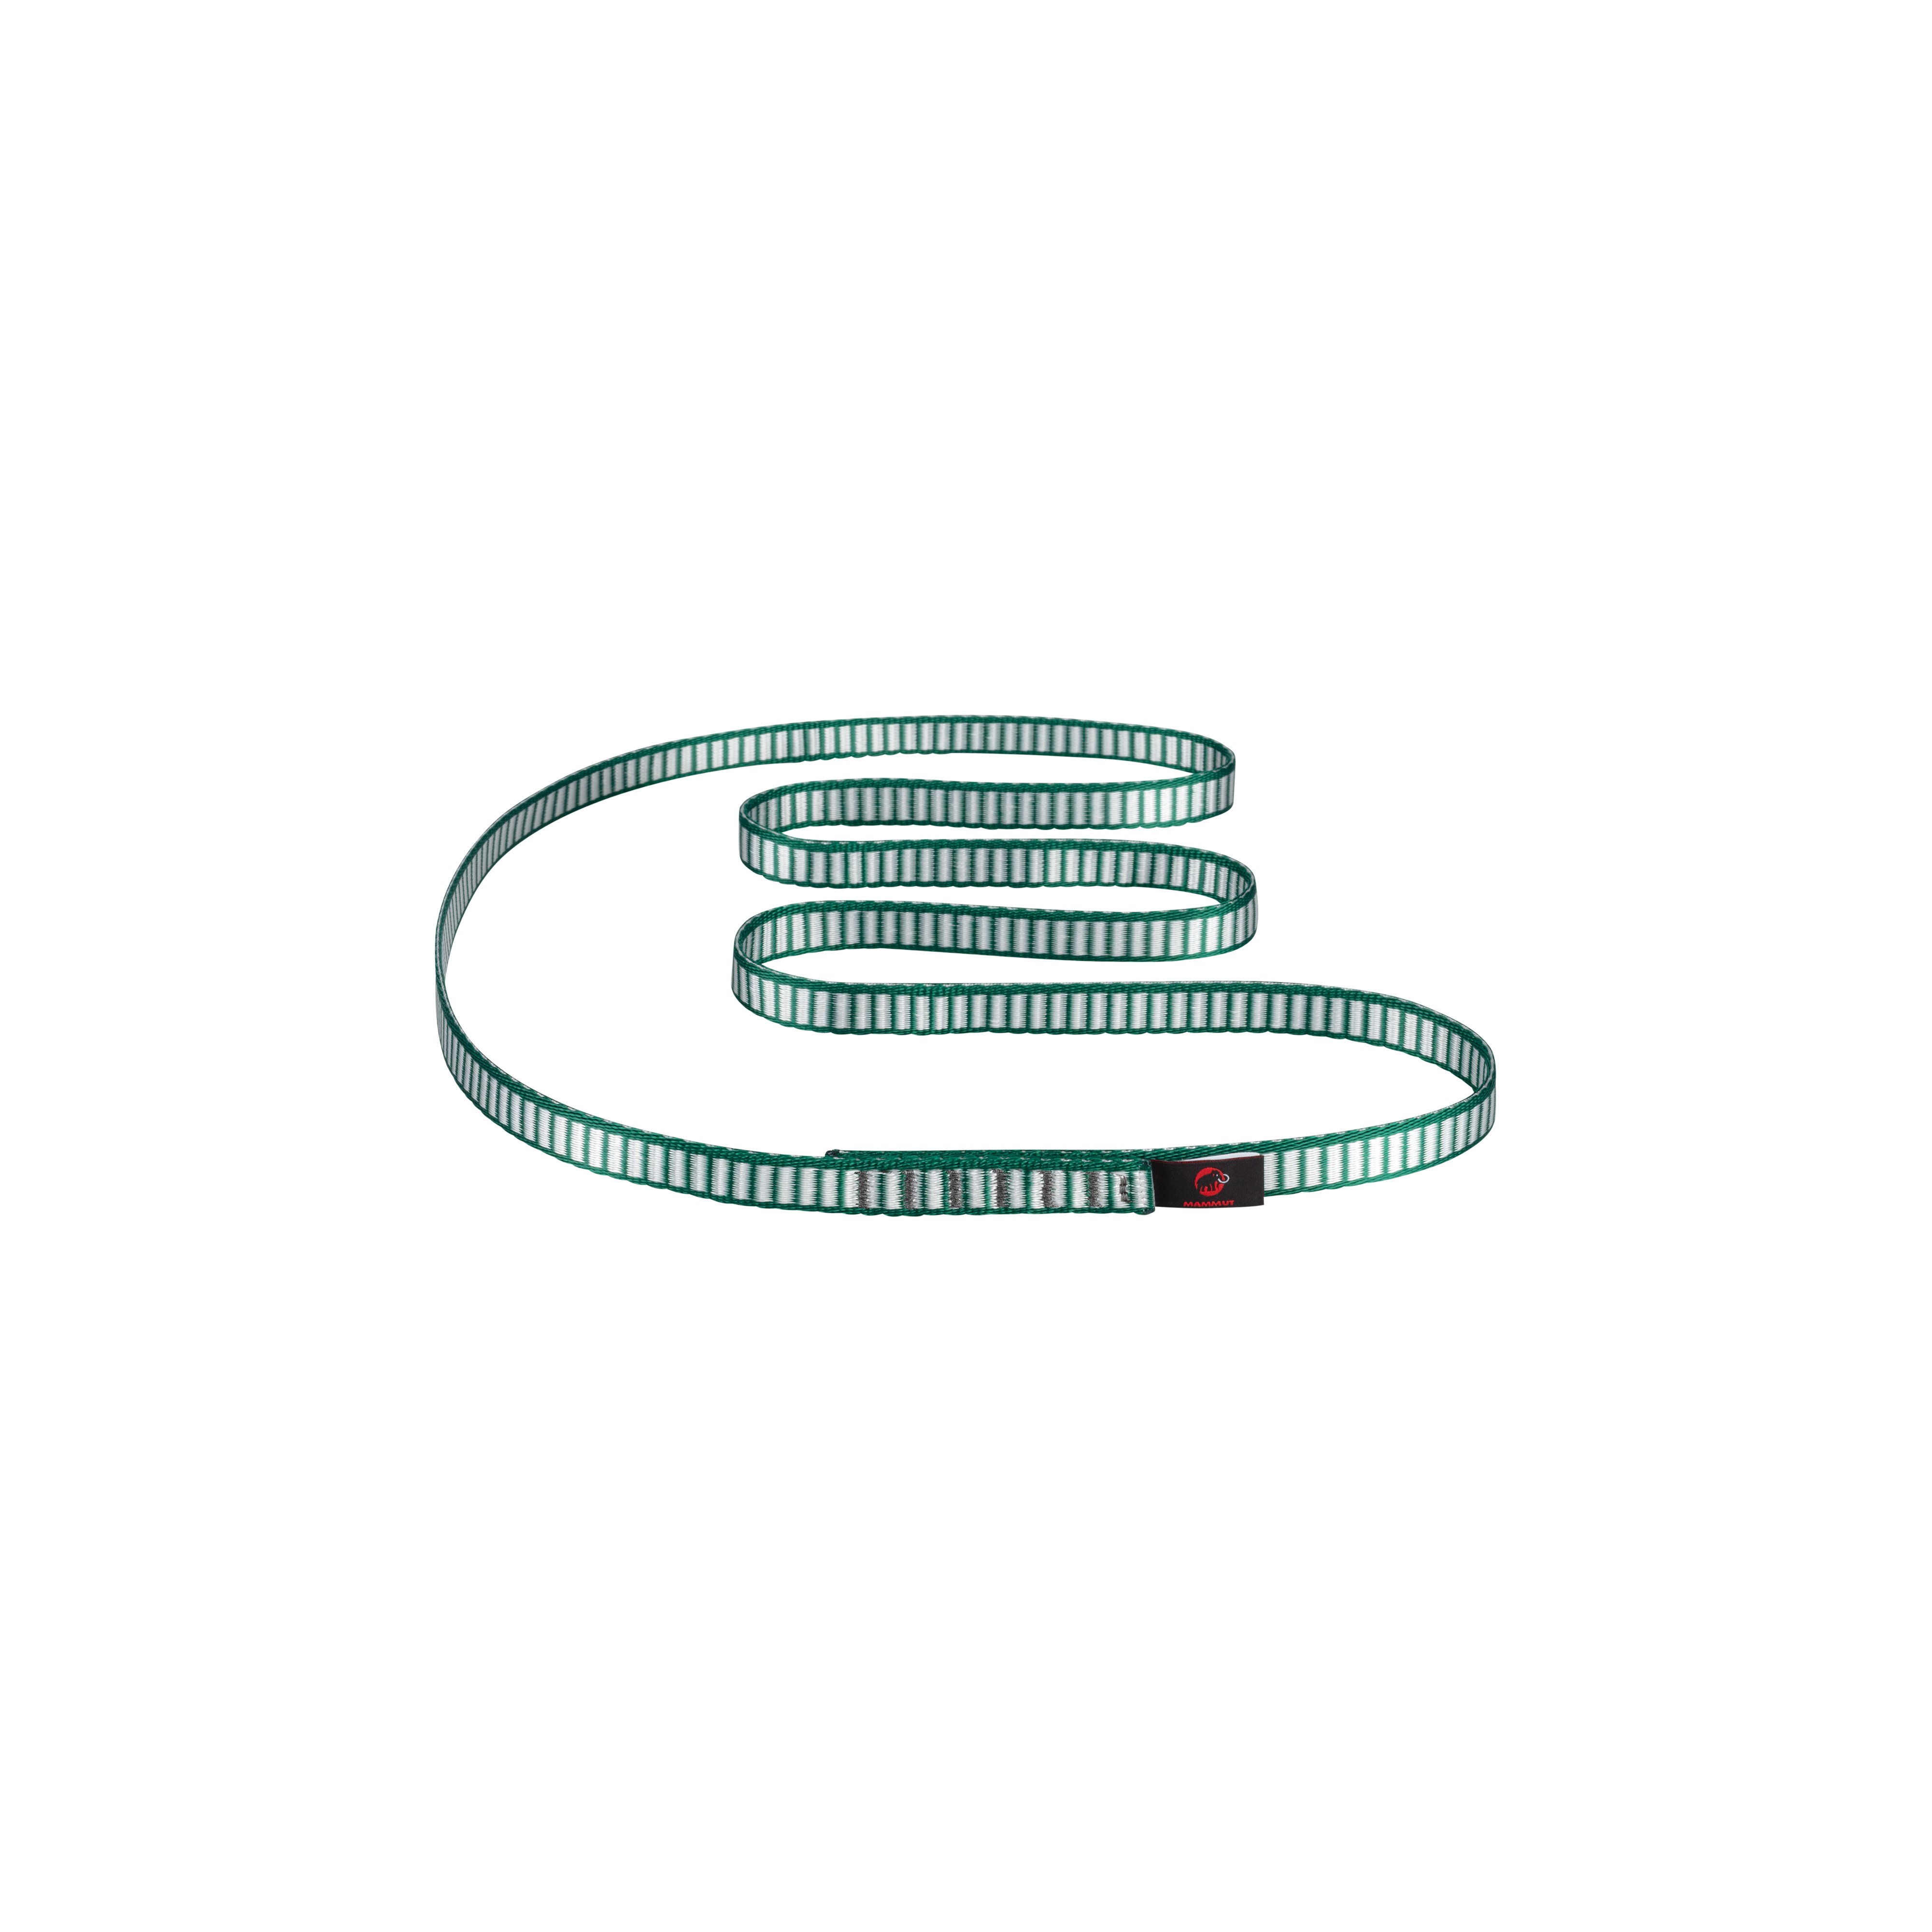 Tubular Sling 16.0 - green, 80 cm product image